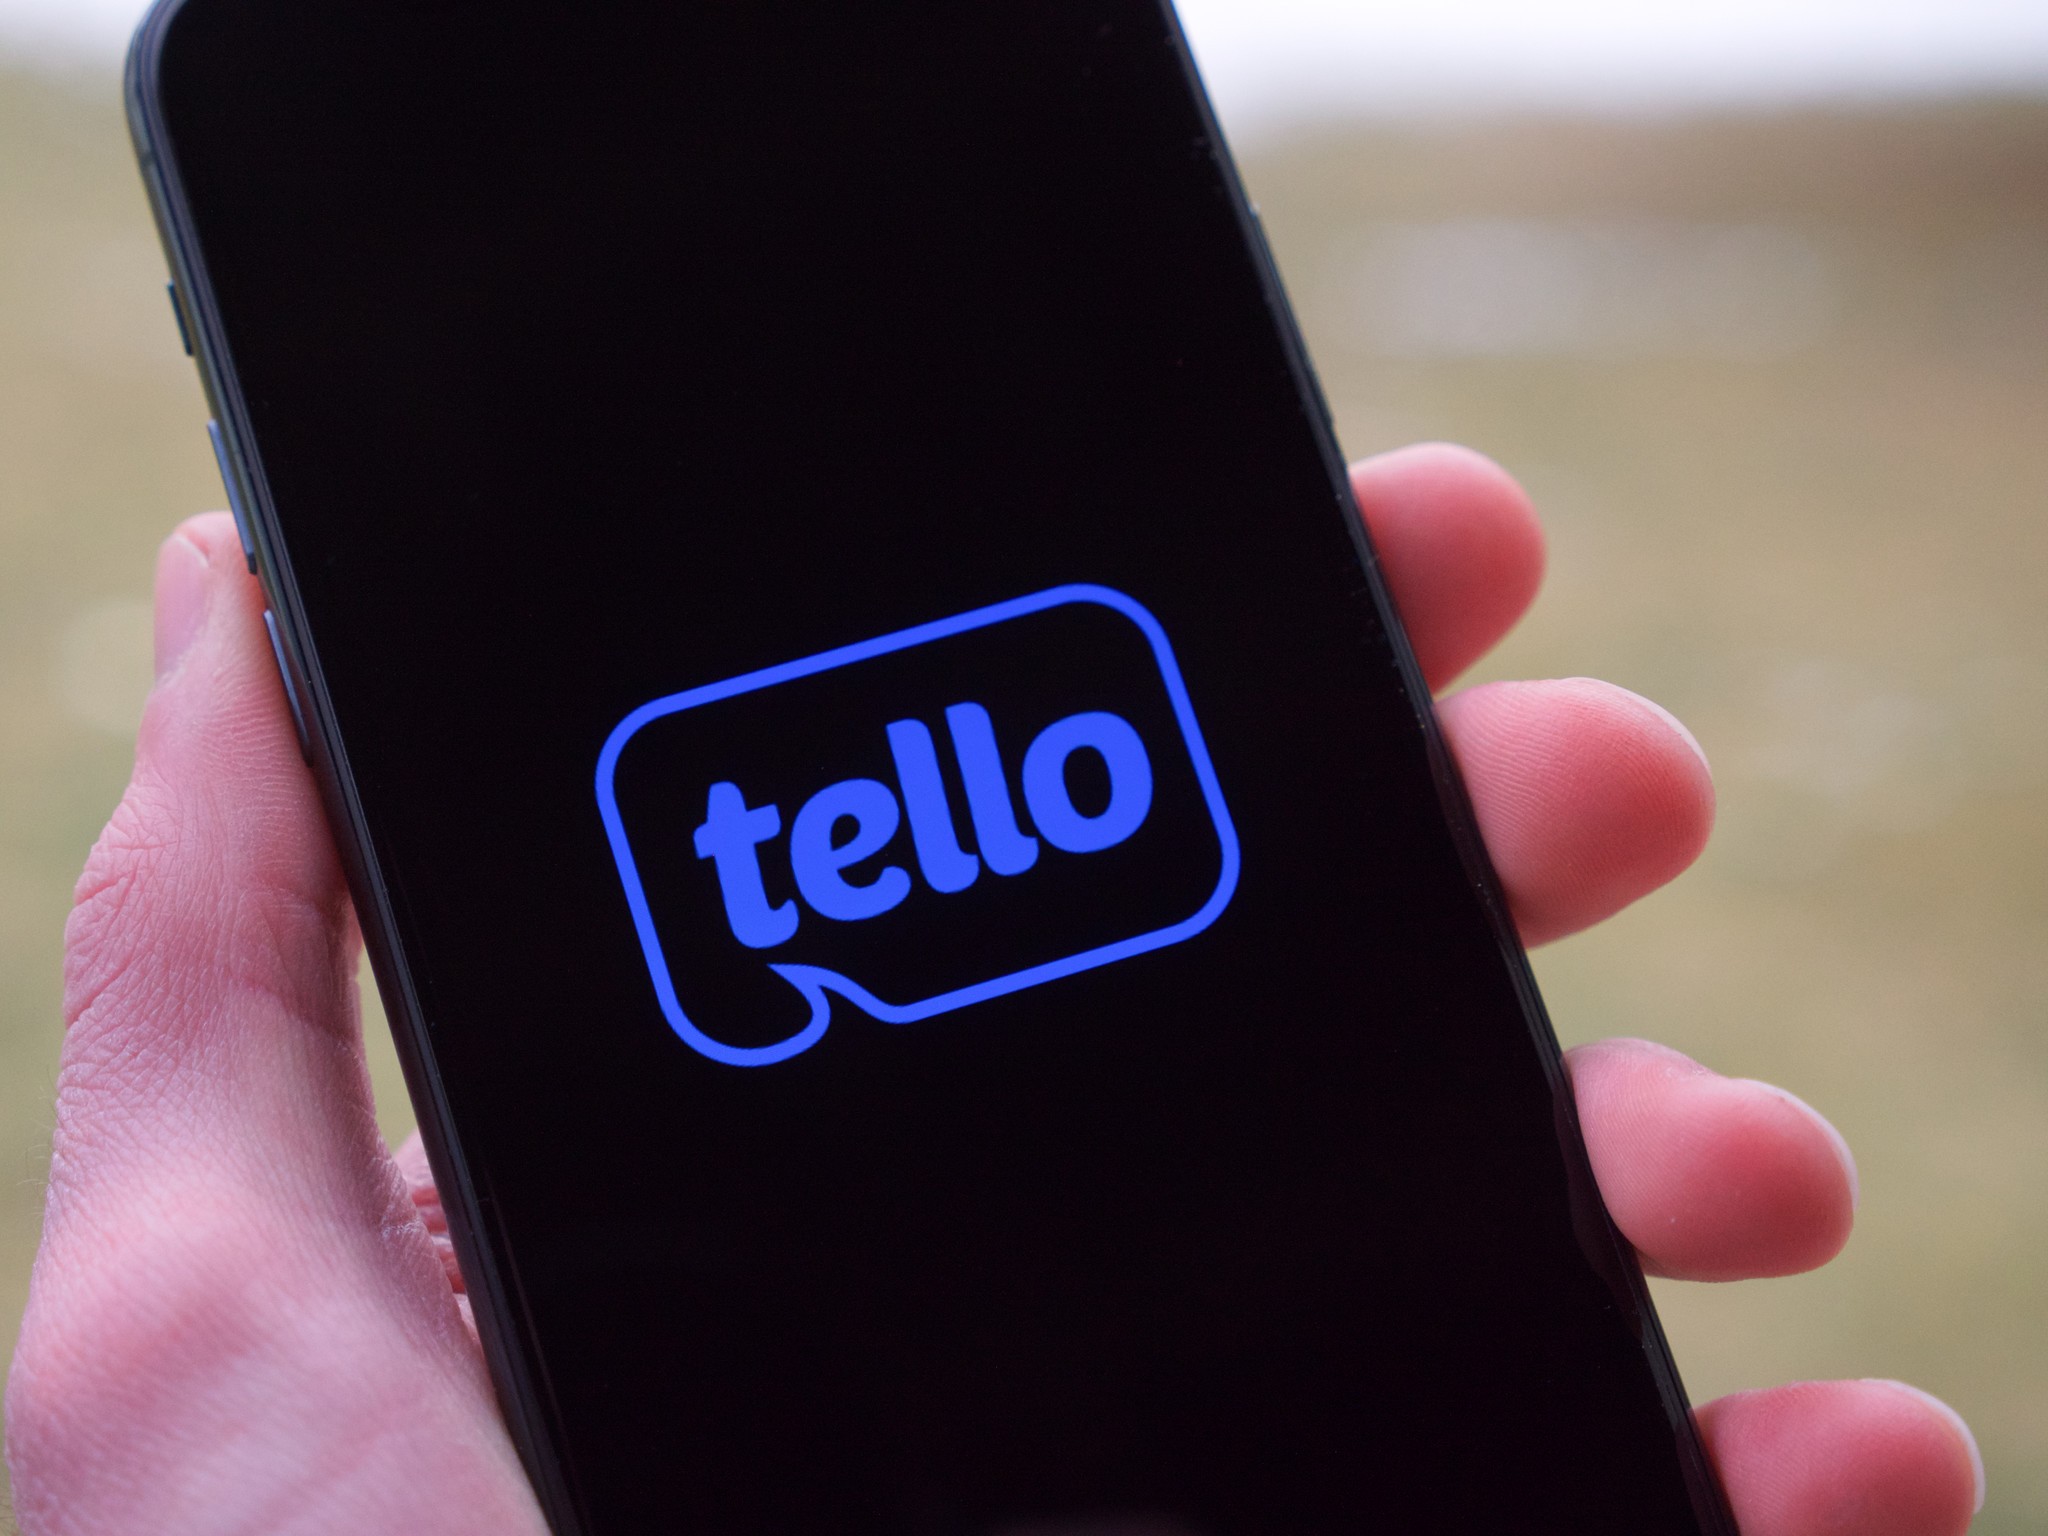 Tello logo on an iPhone 11 Pro